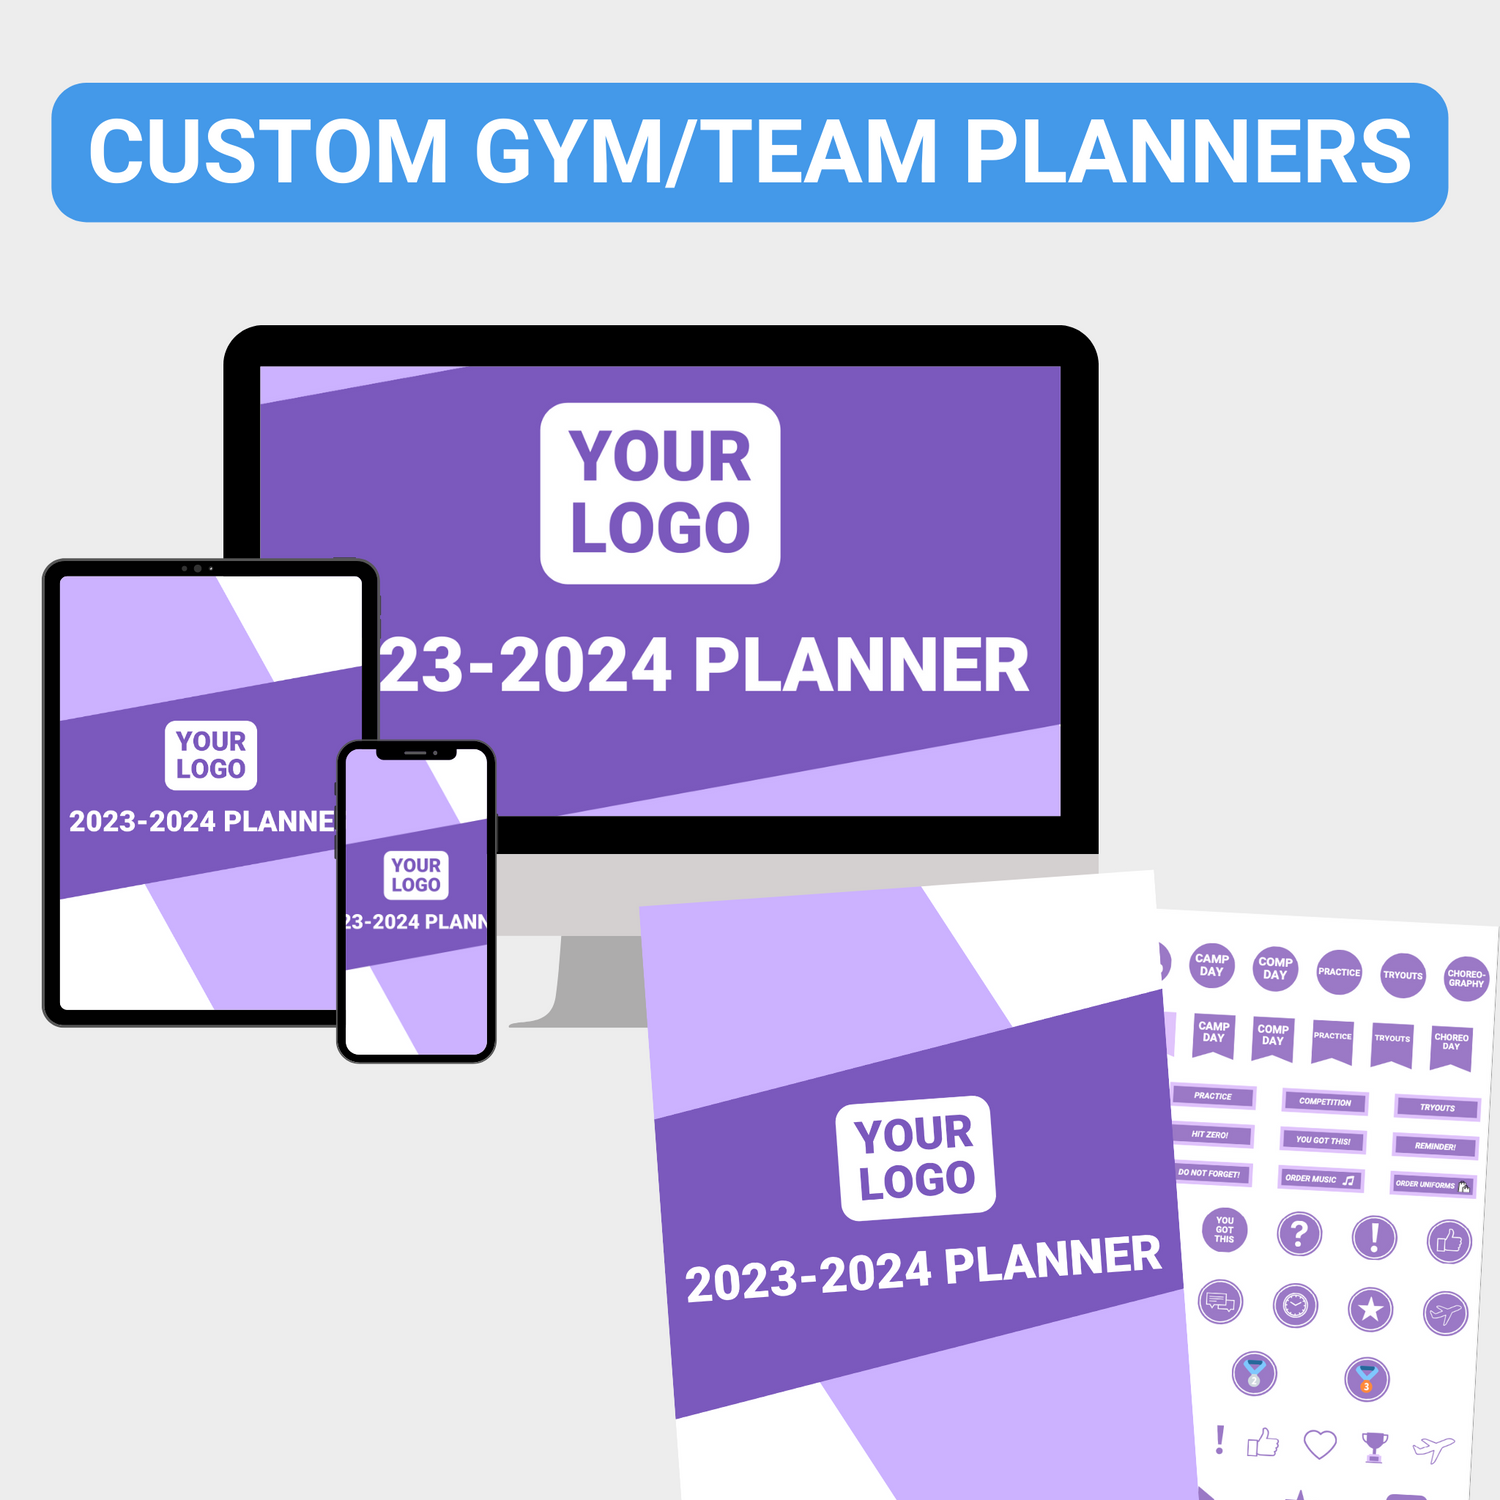 Custom gym/team planners